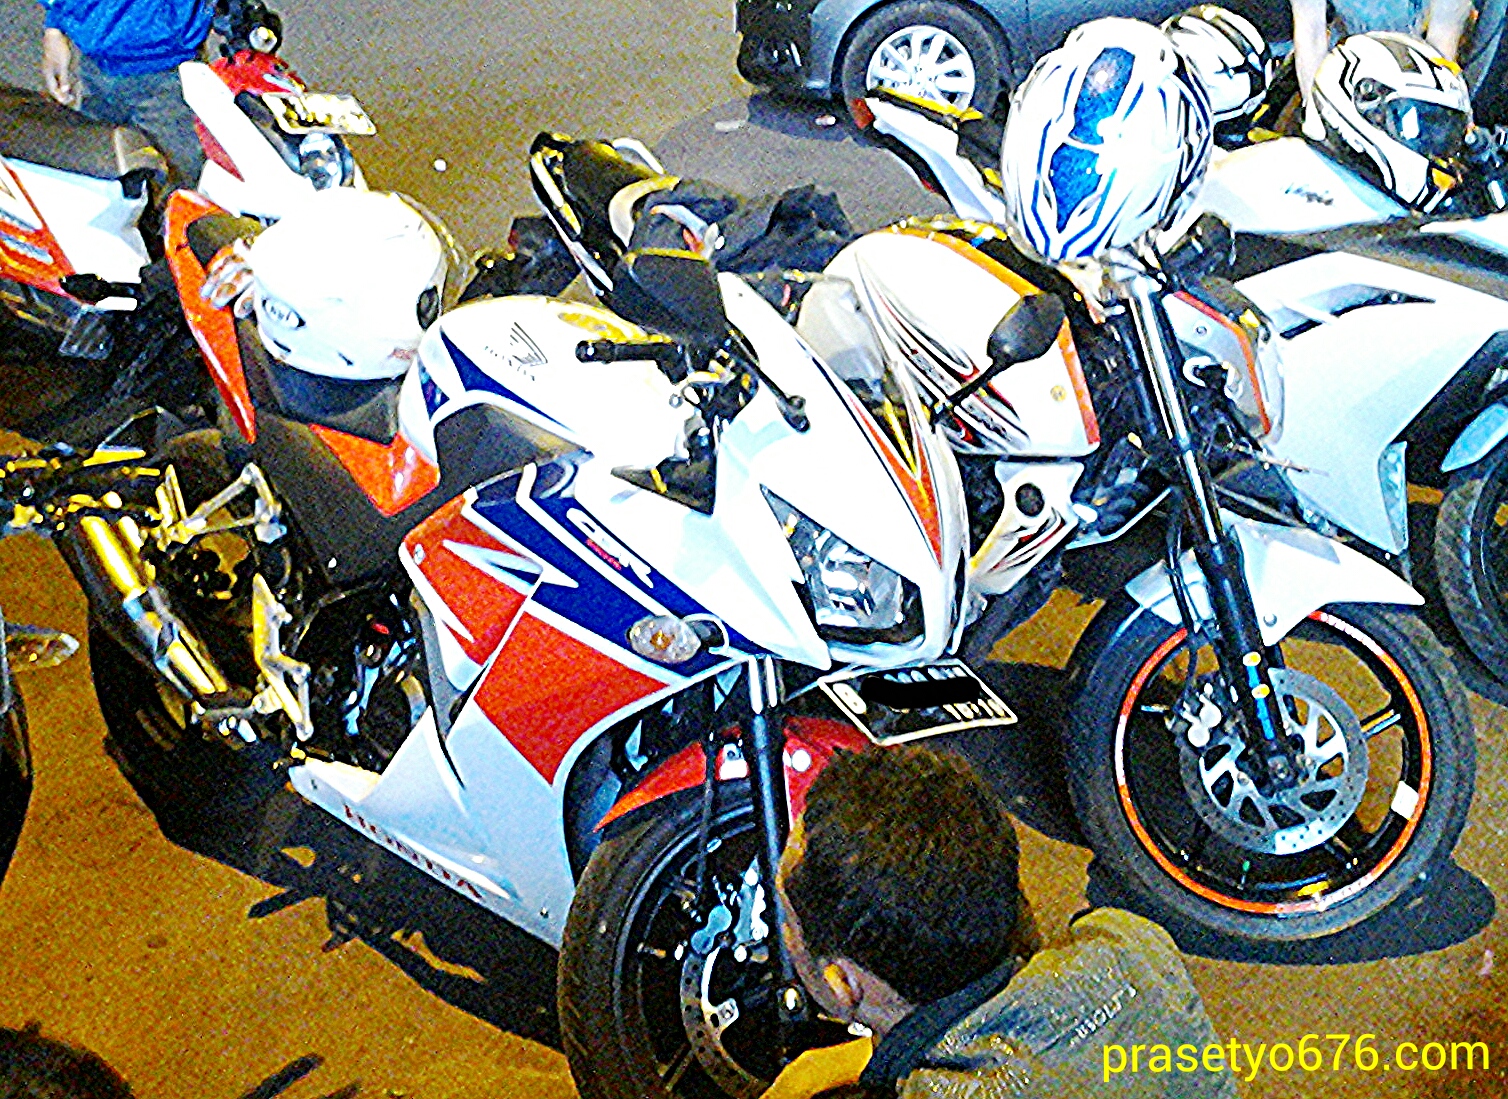 Perbandingan Visual Dimensi Honda All New CBR 150R Dan Yamaha Byson Prasetyo676com